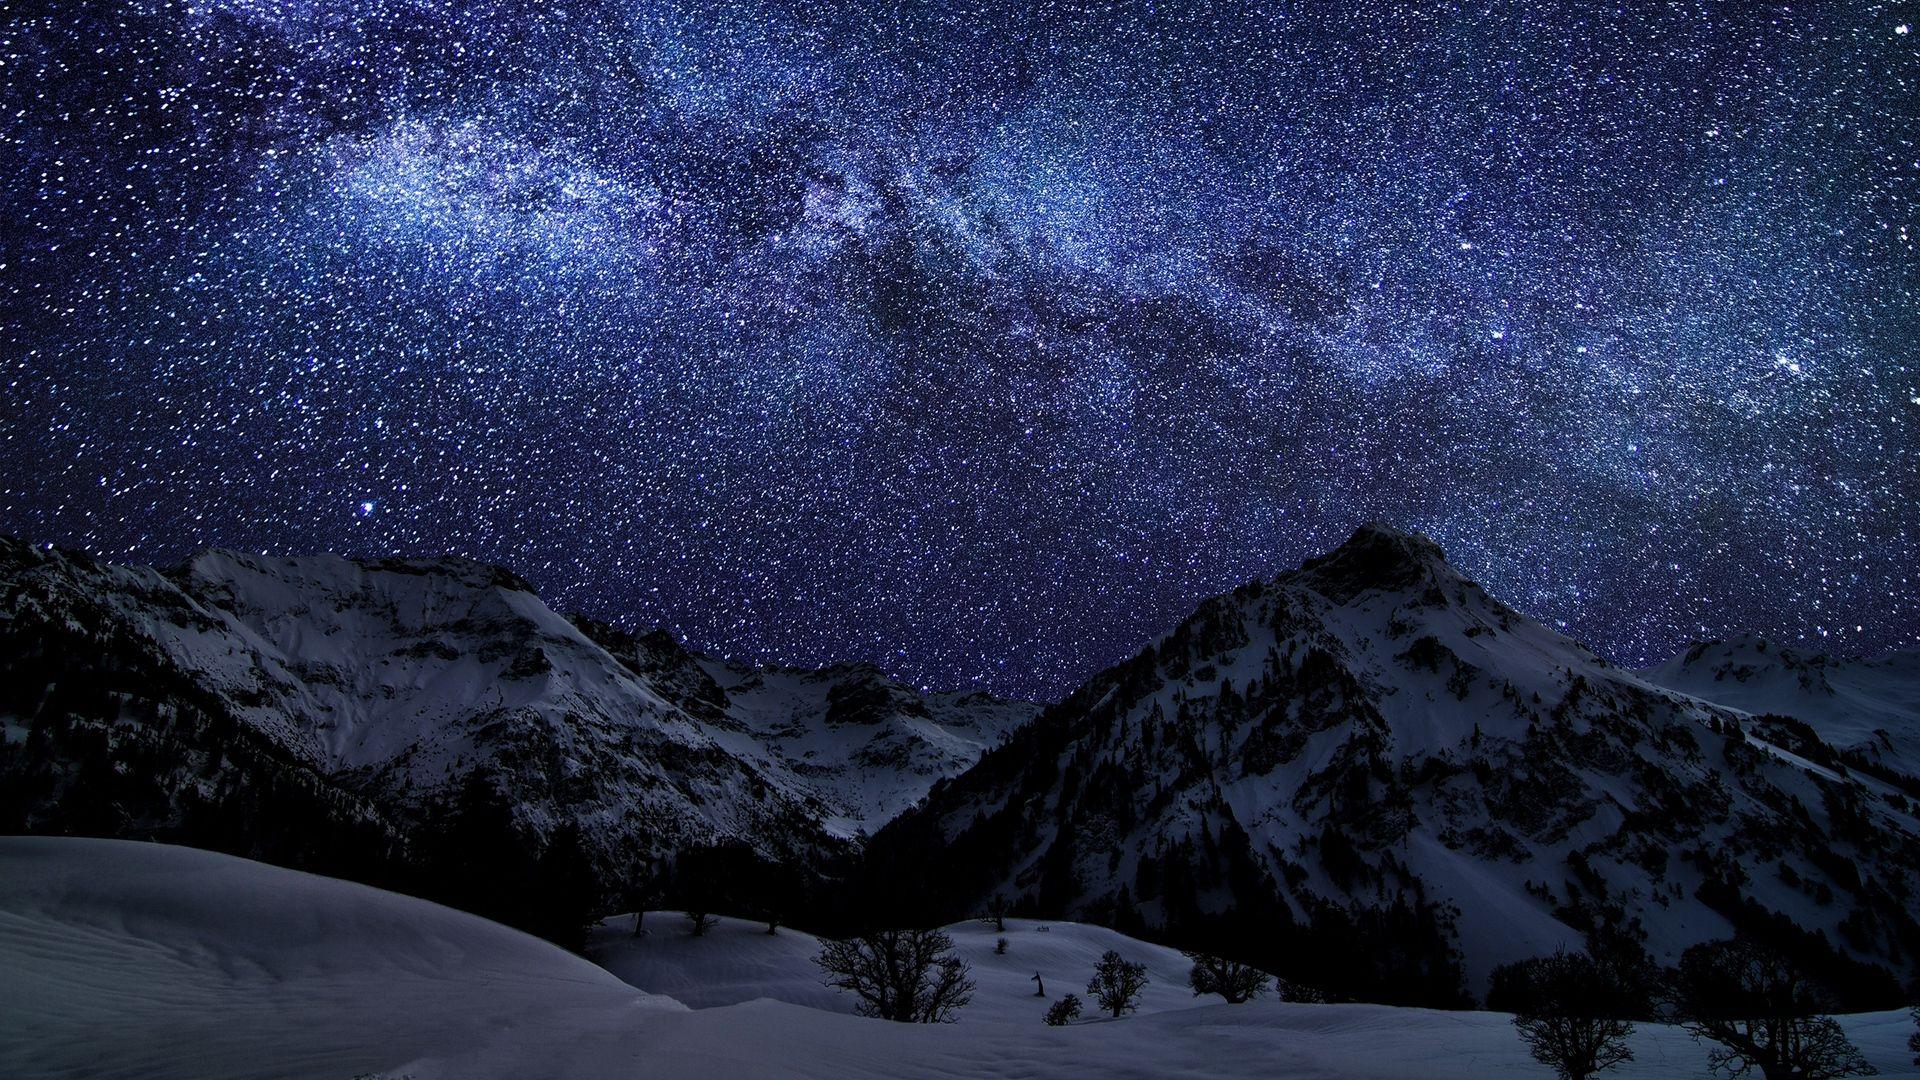 Download wallpaper 1920x1080 winter, sky, stars, nature, night full